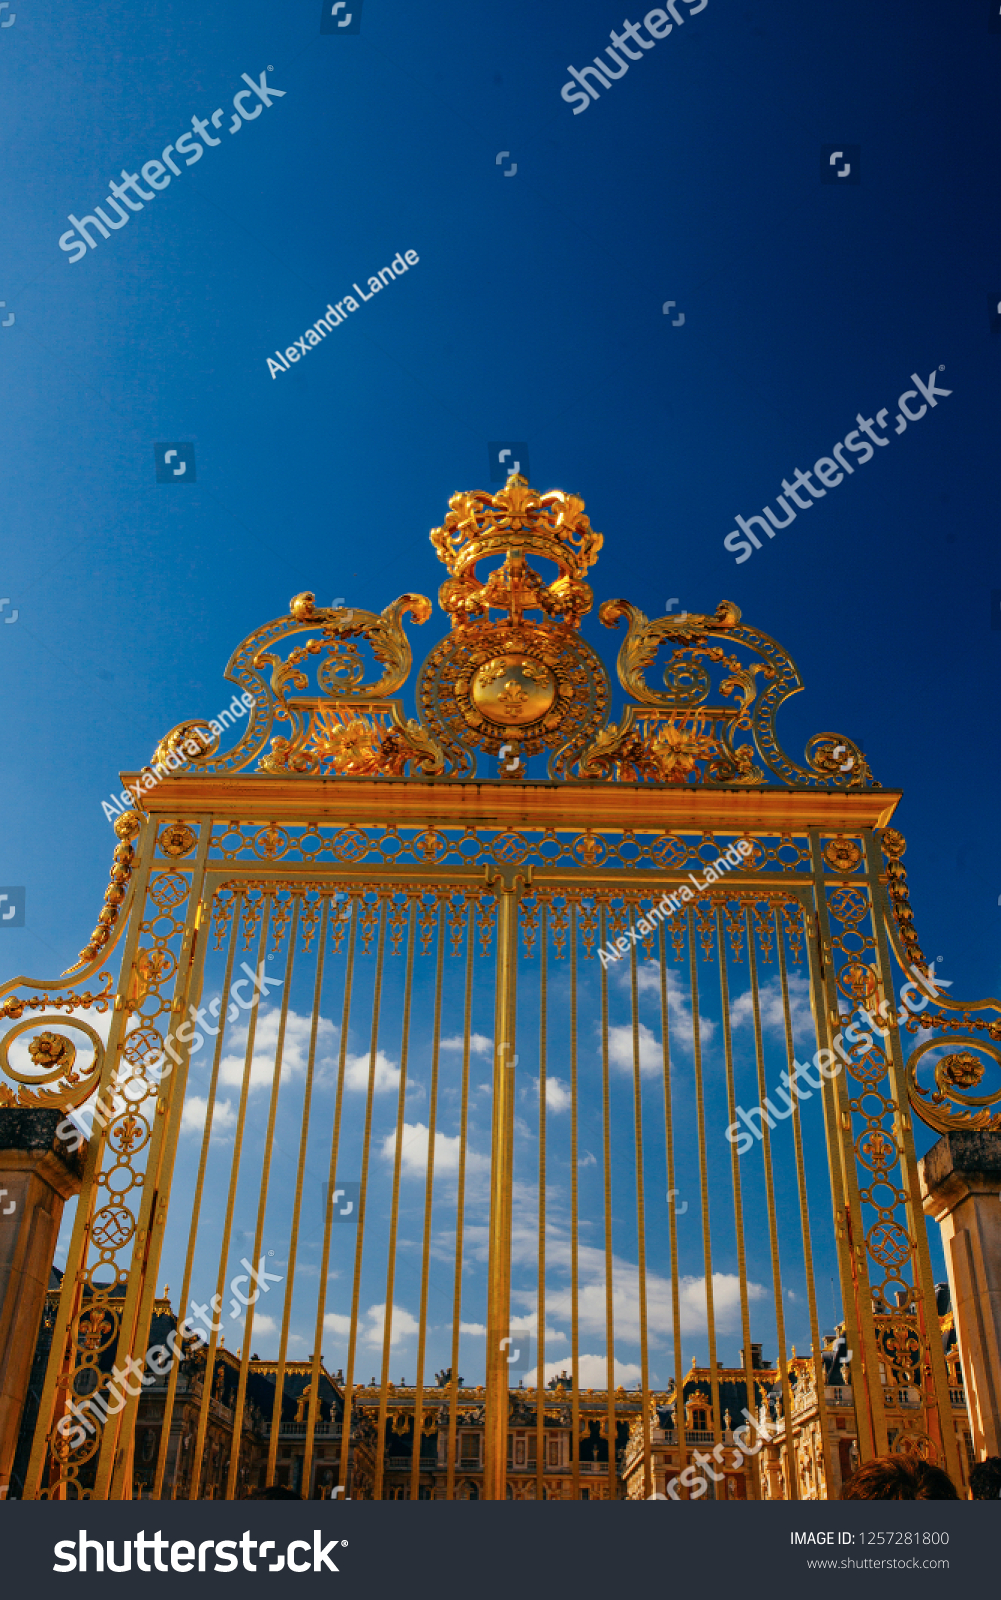 Versailles chateau. France. View of golden gate to palace. Royal residence near Paris. King's quarters. Famous touristic renaissance architecture landmark in summe #1257281800